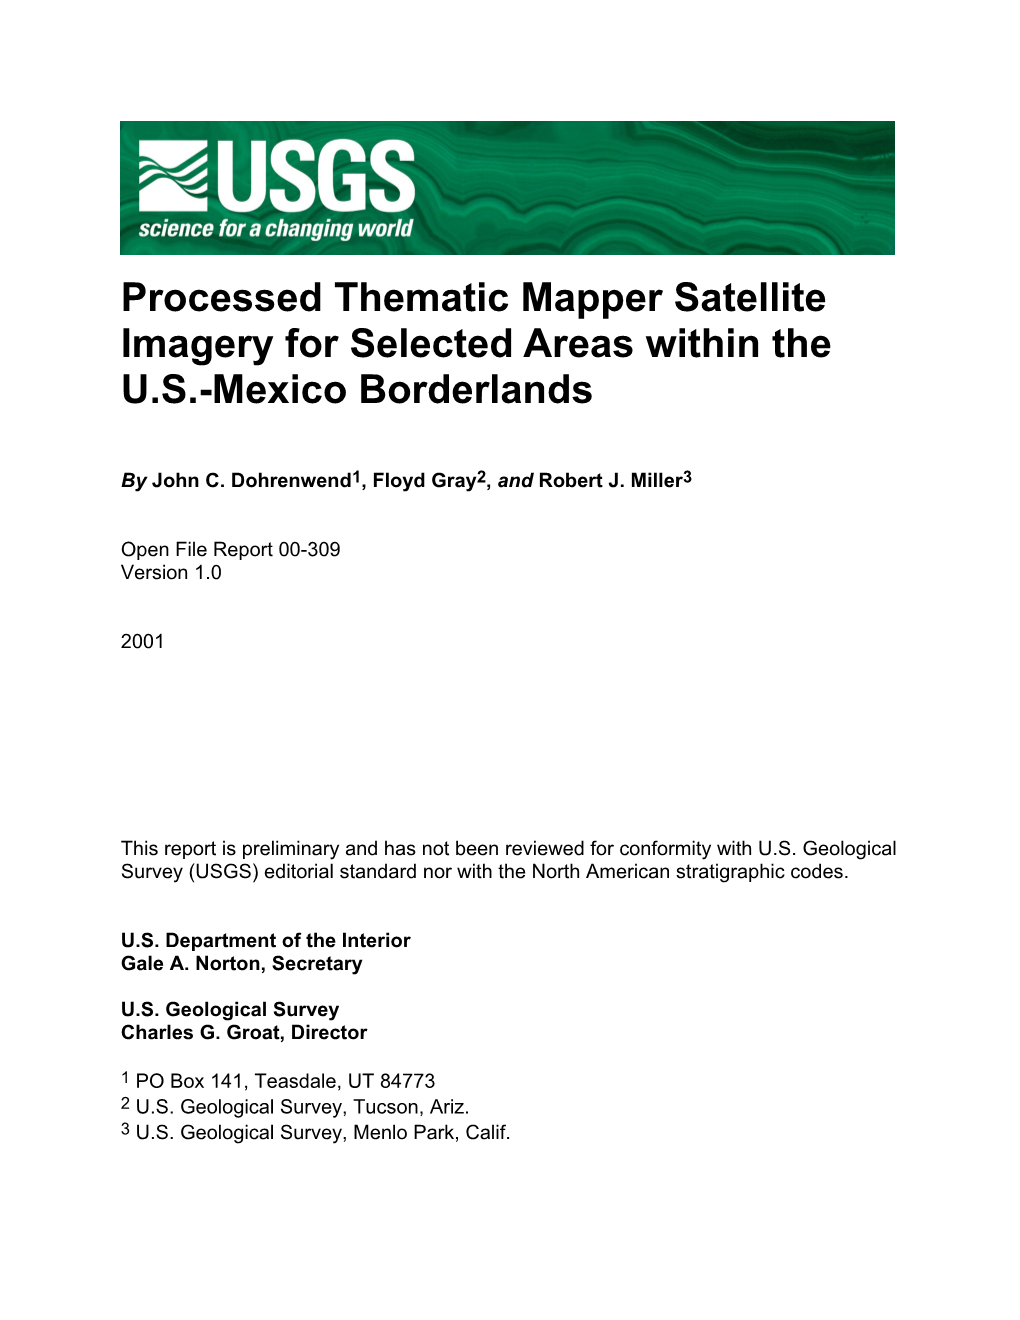 USGS Open File Report 00-309